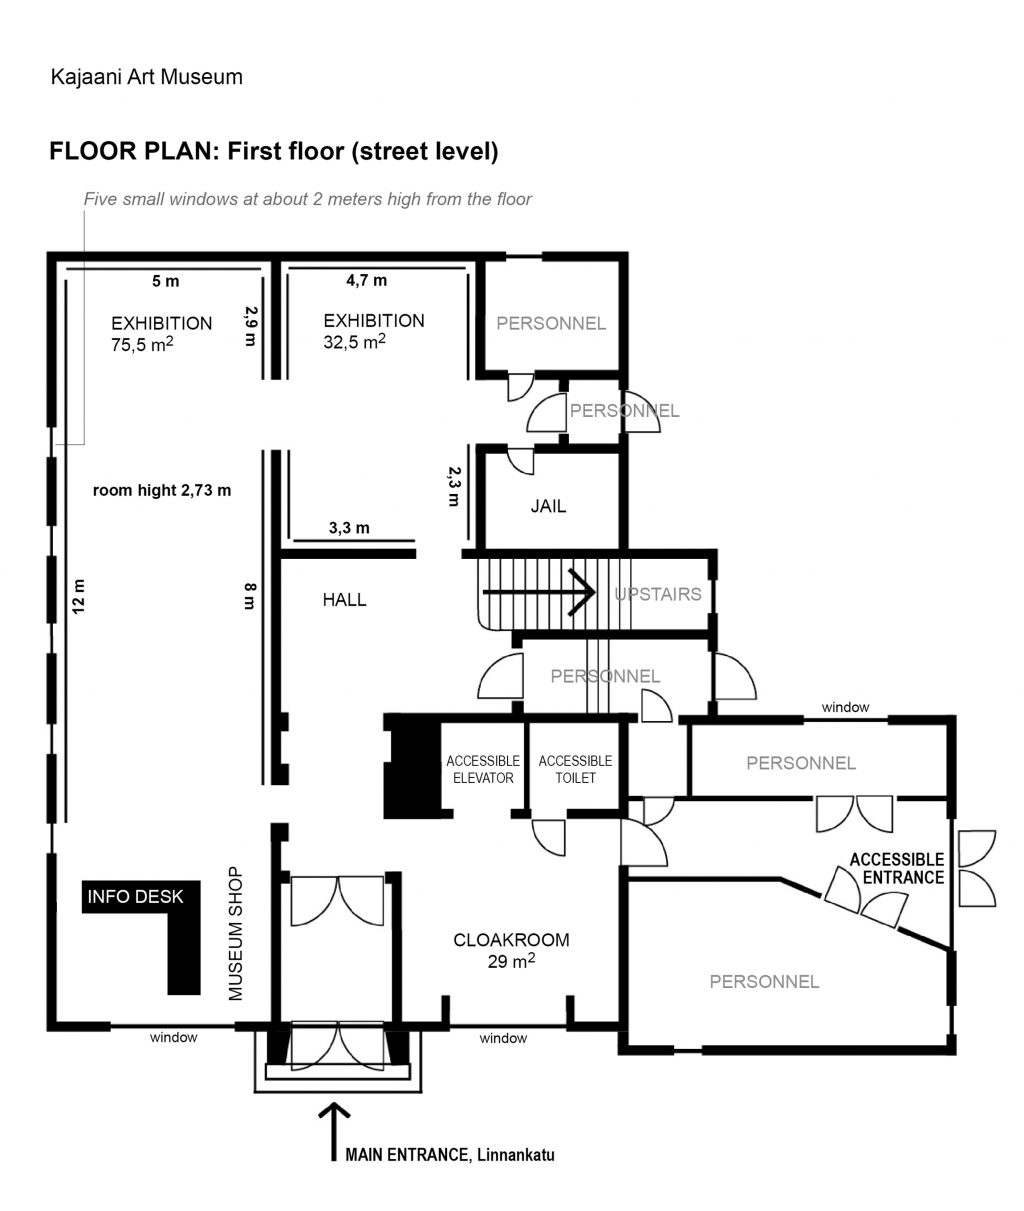 The floor plan of the street level